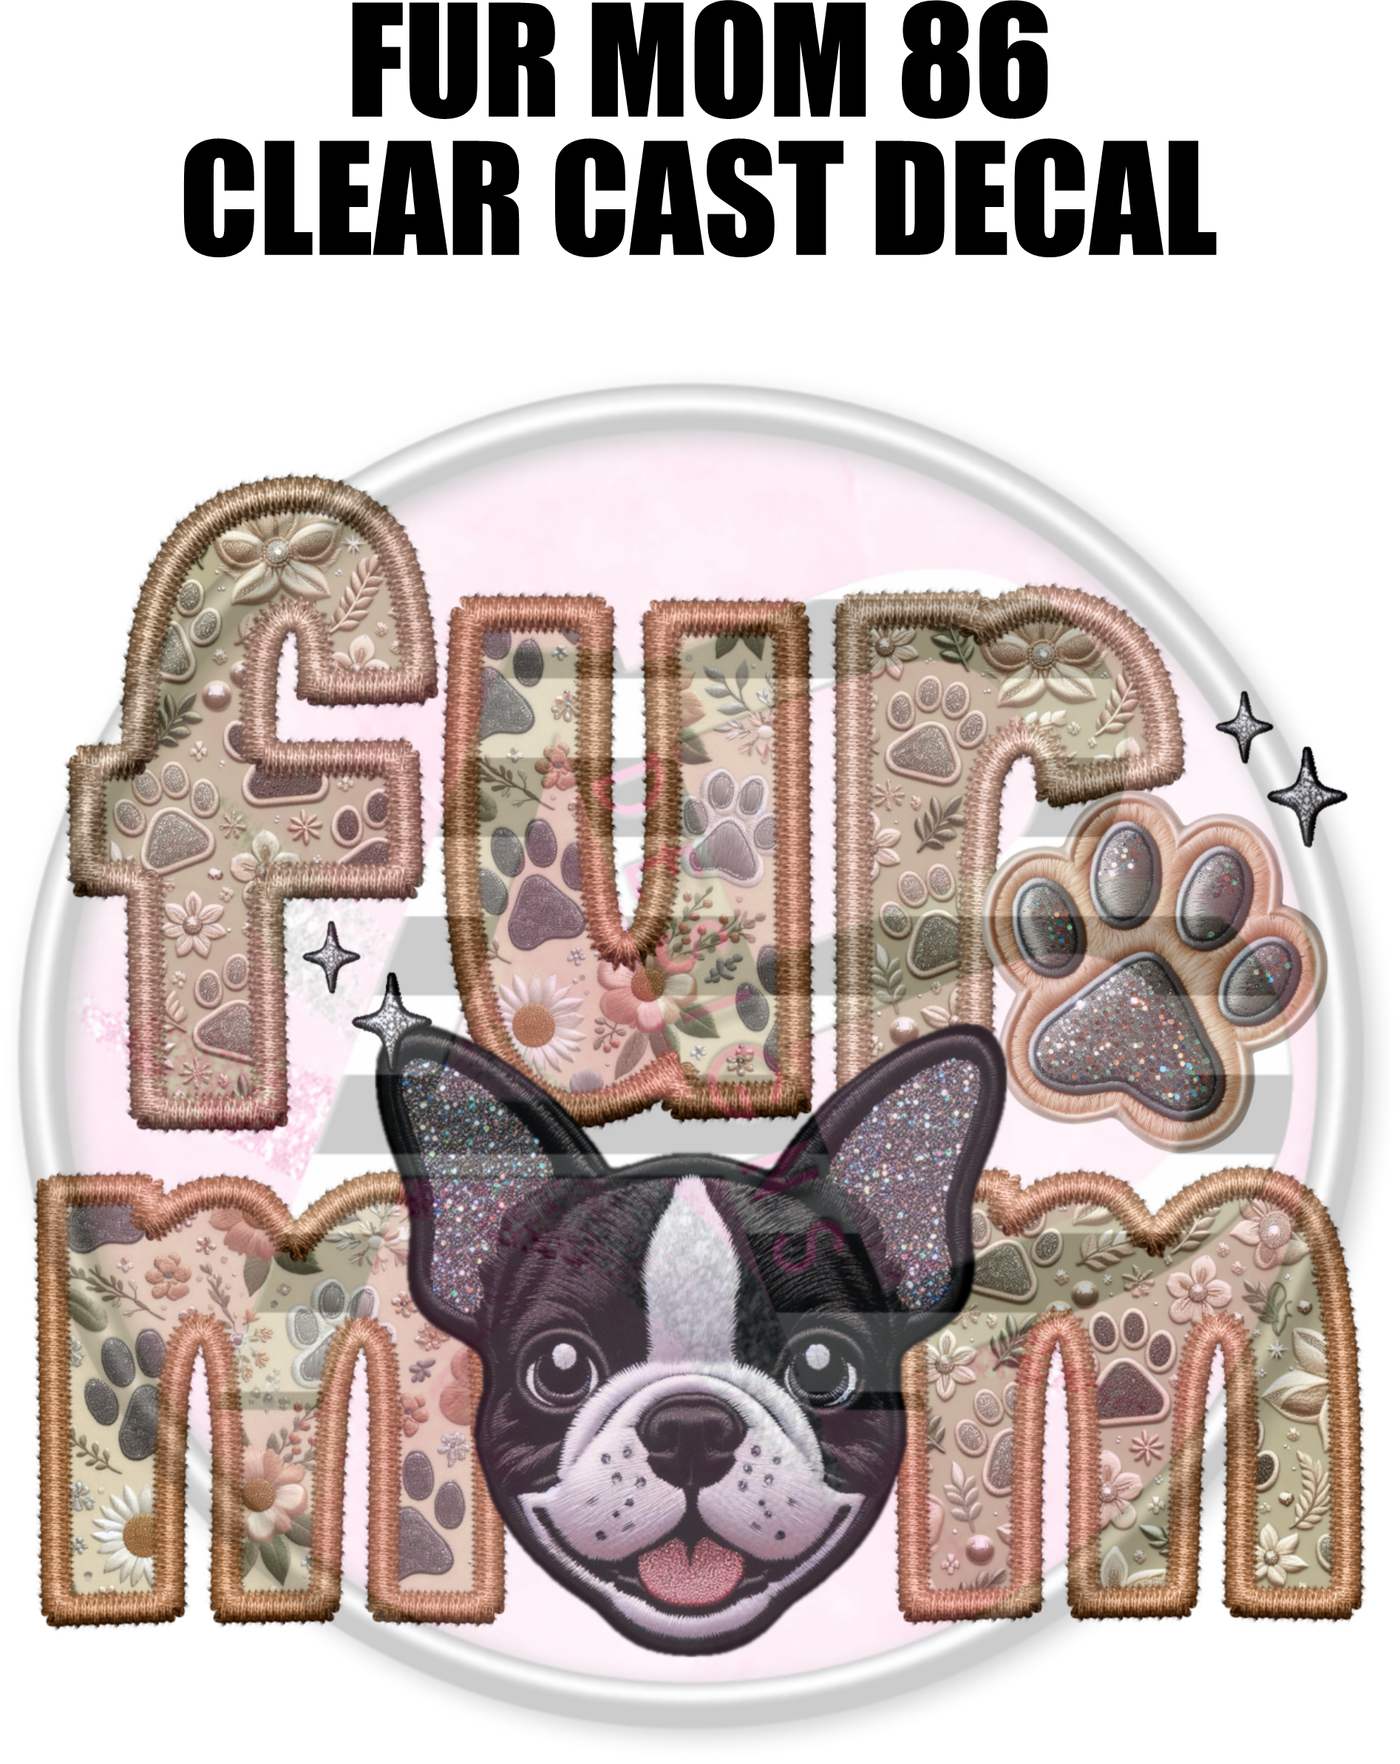 Fur Mom 86 - Clear Cast Decal